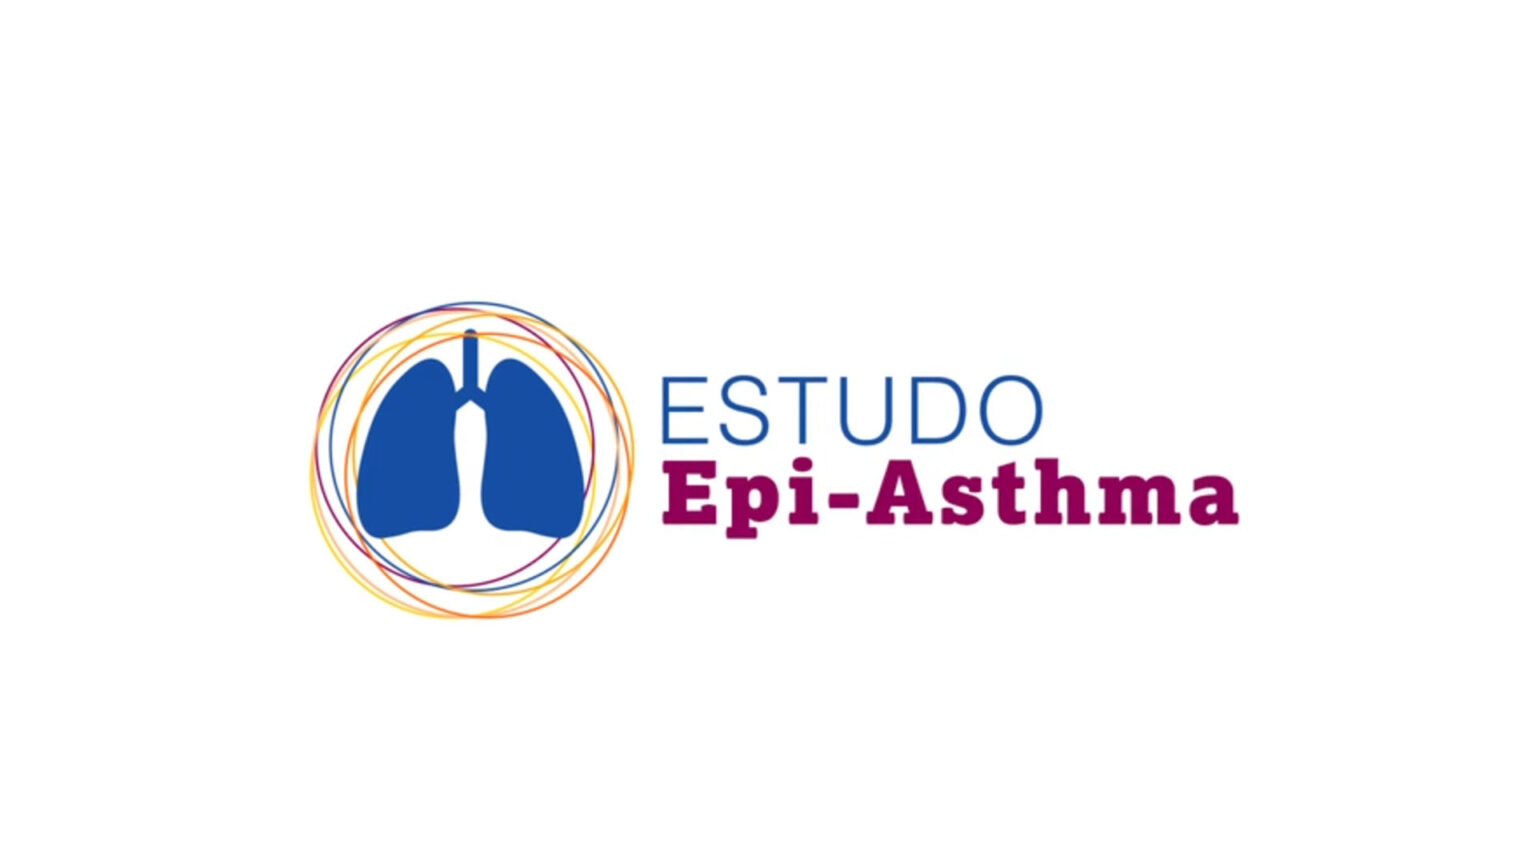 Estudo nacional sobre asma chega à zona Centro do país